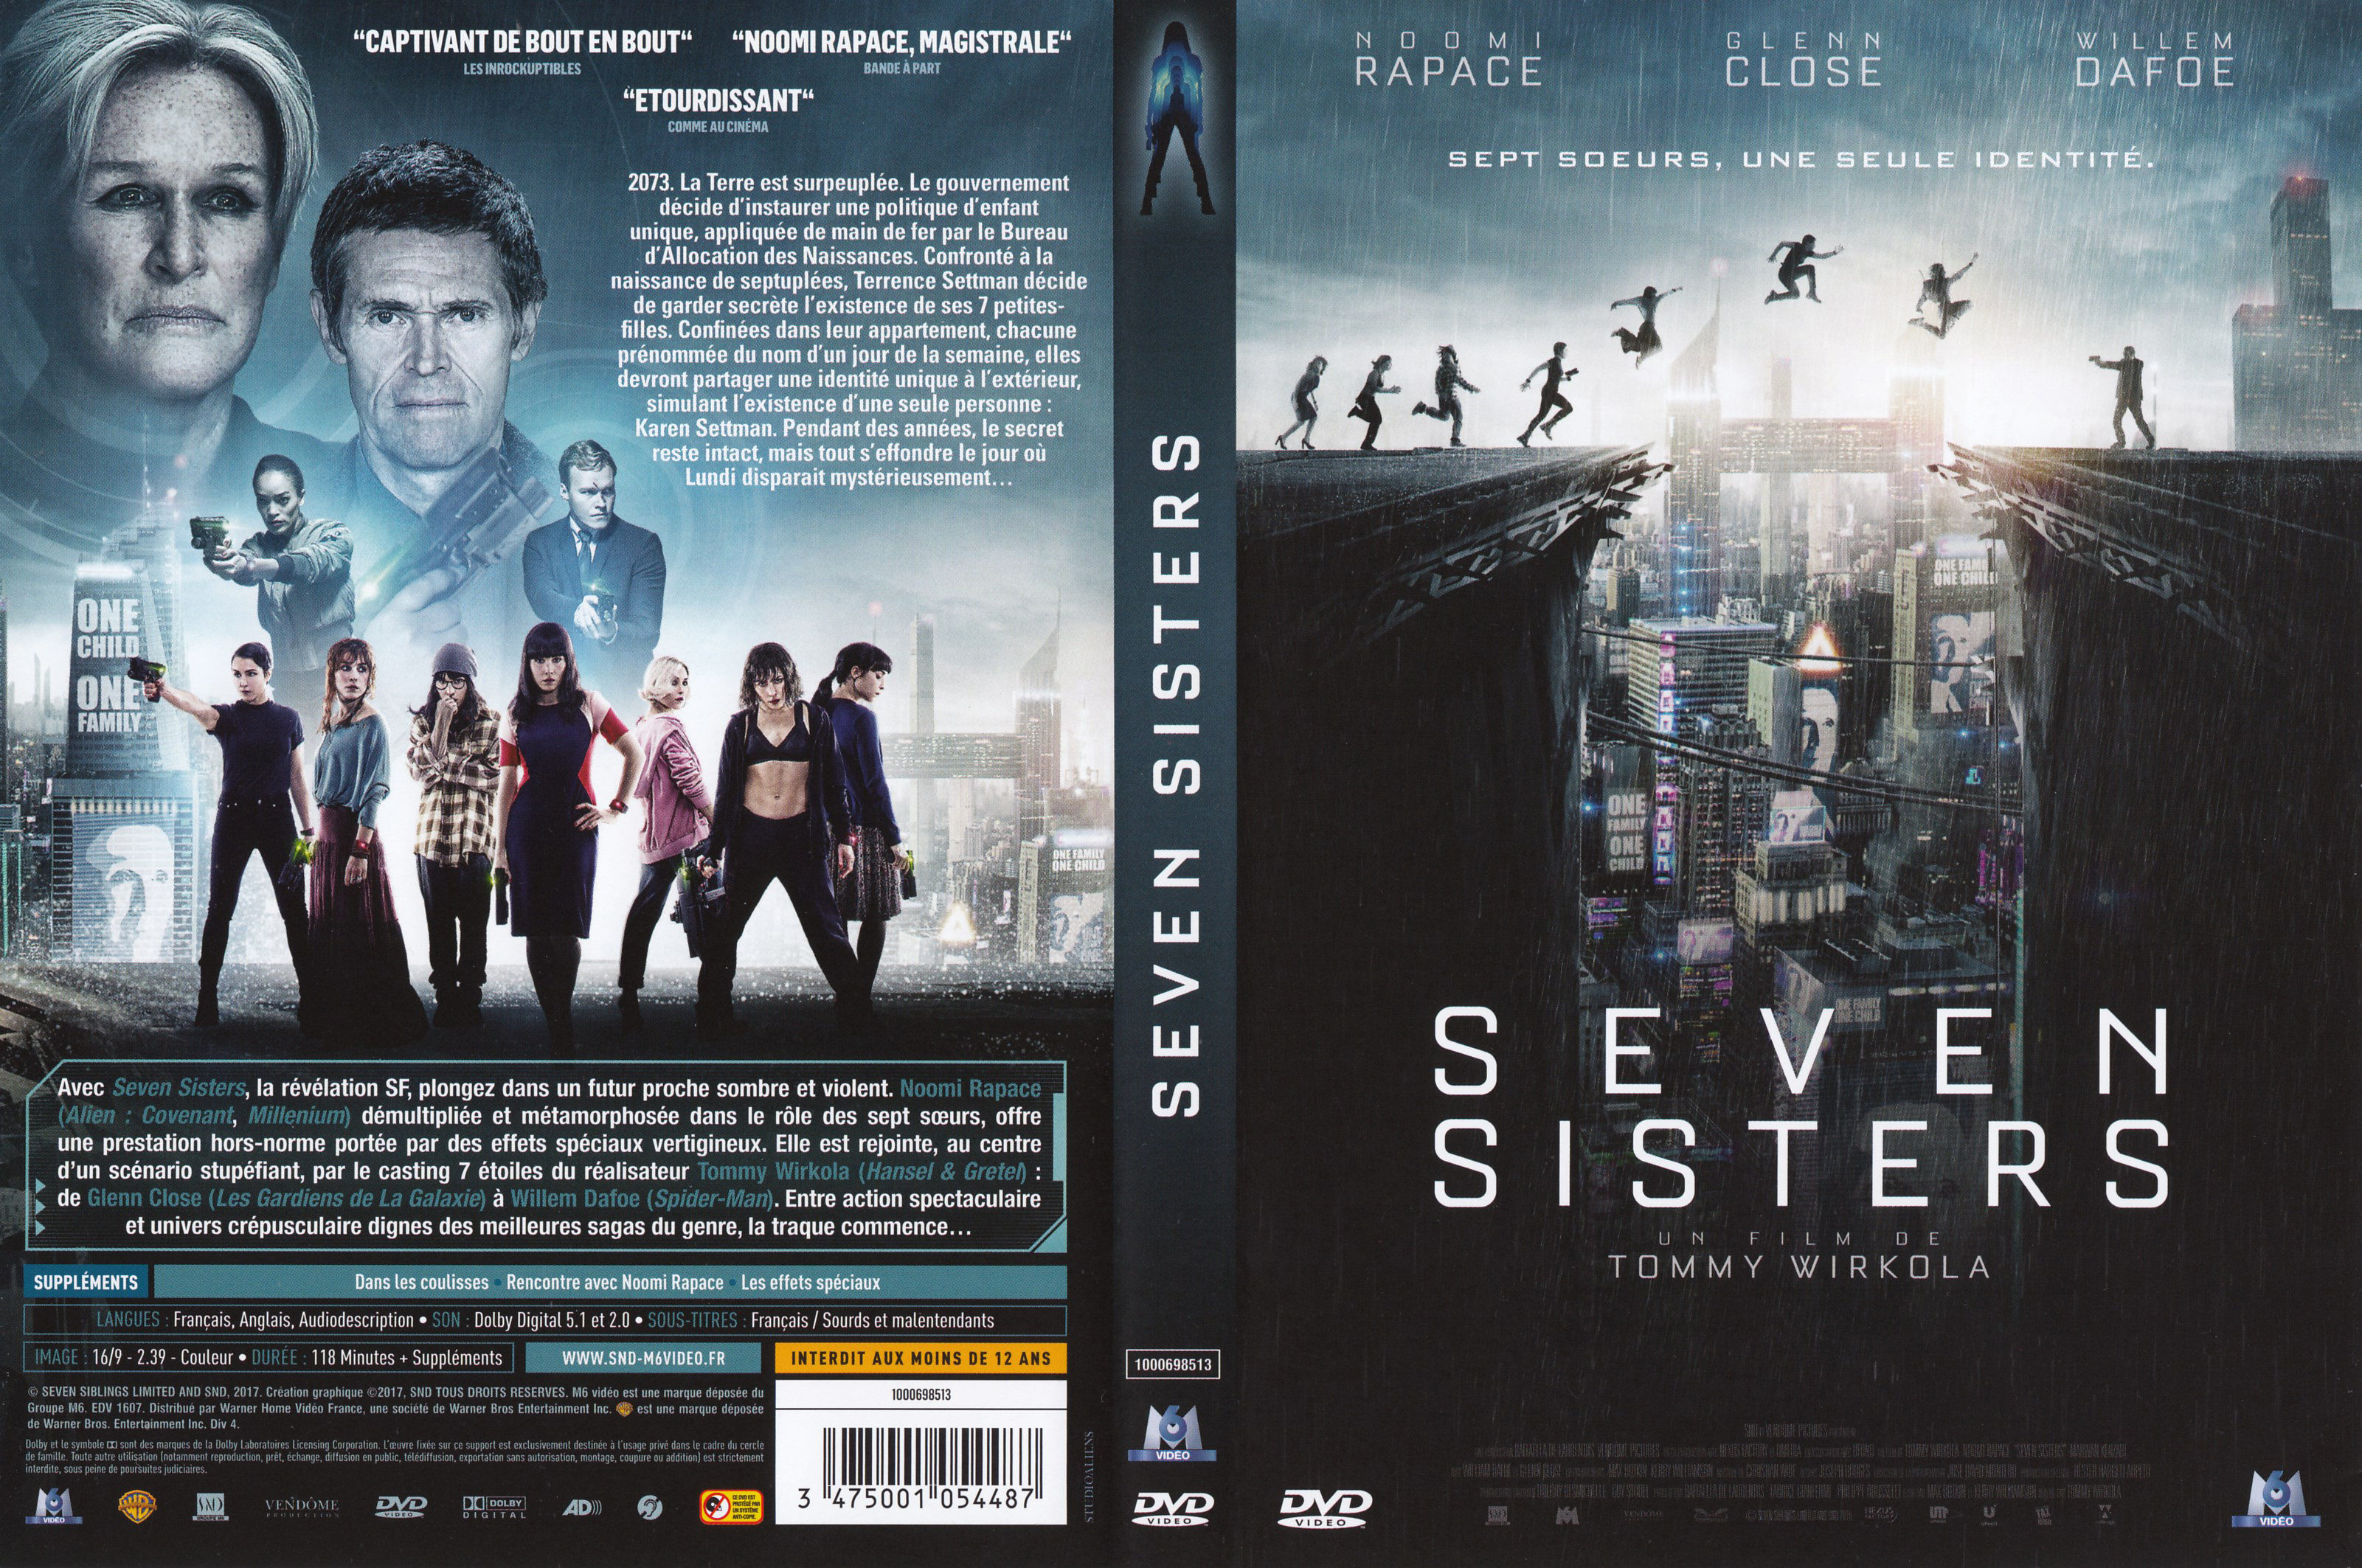 Jaquette DVD Seven sisters